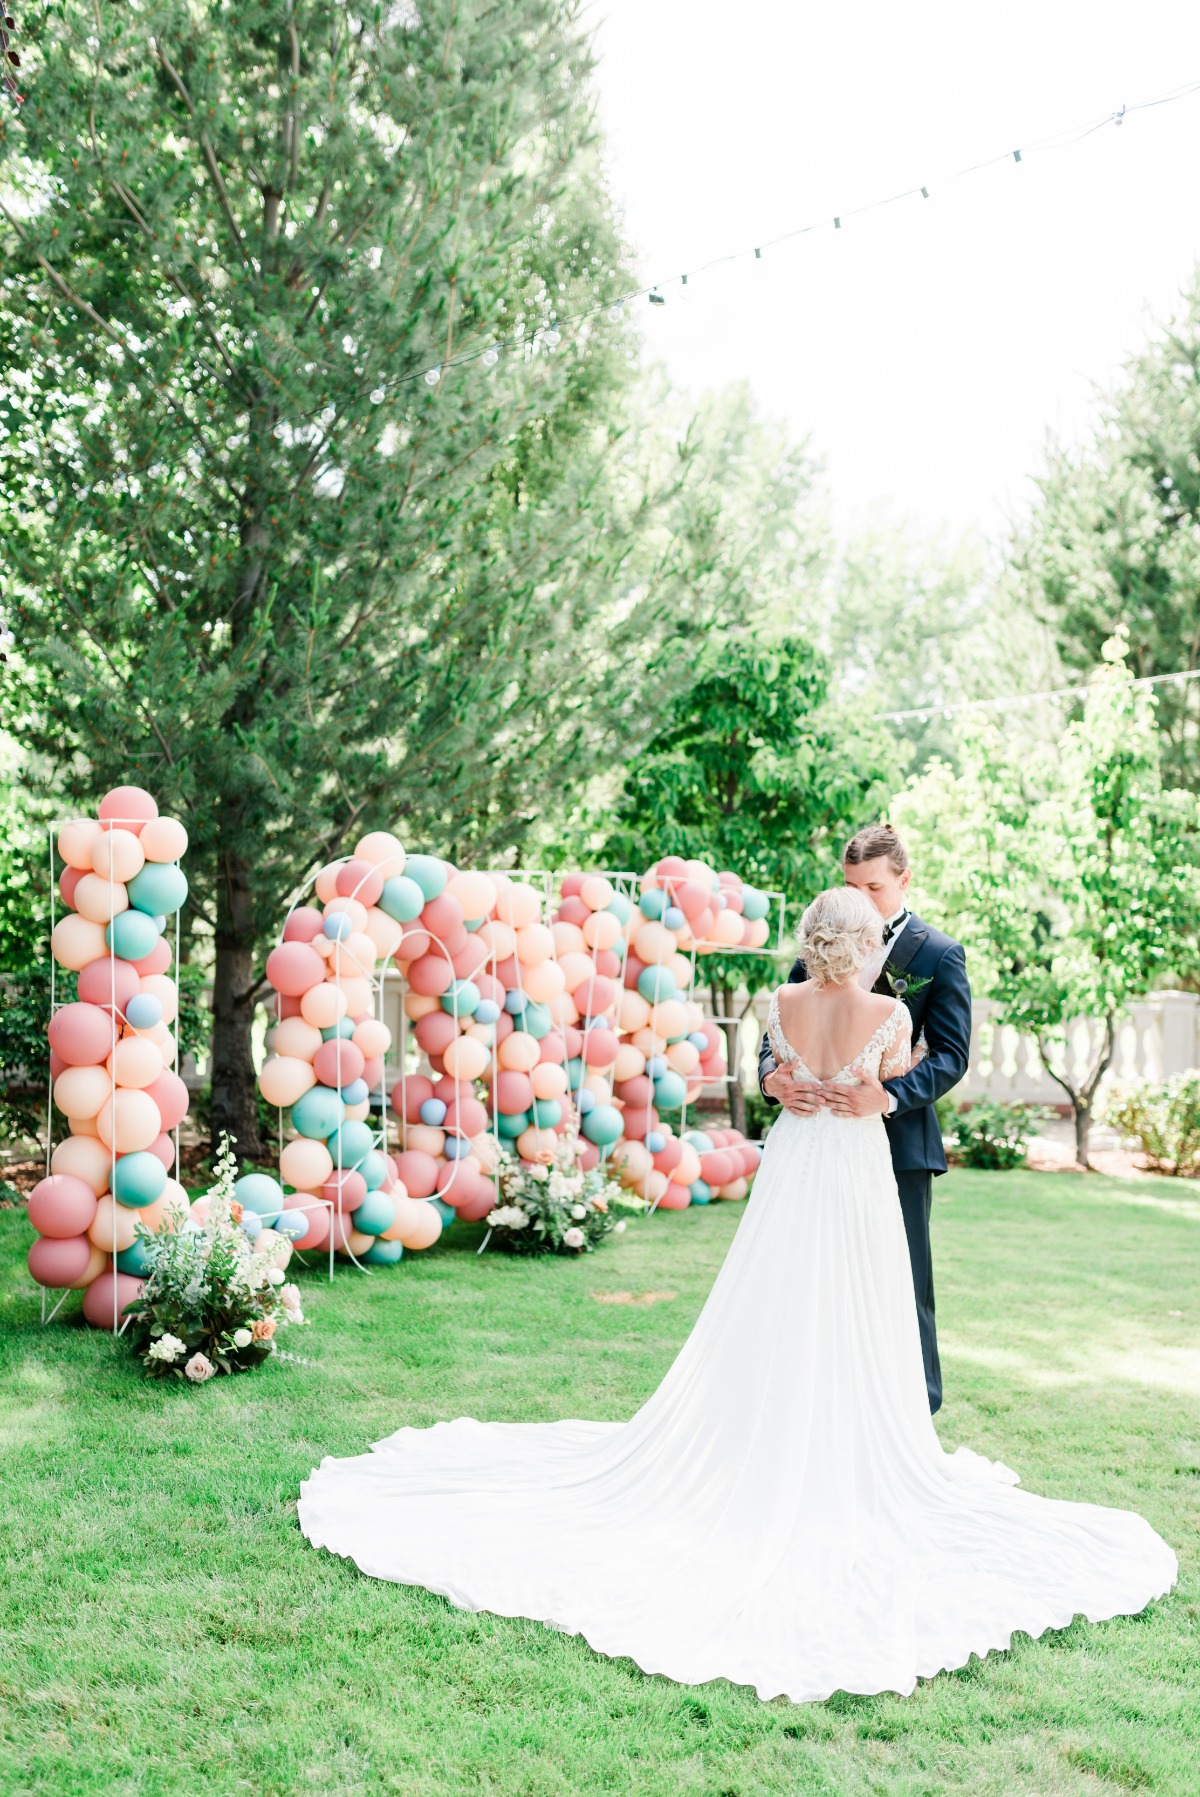 giant balloon arrangement at wedding